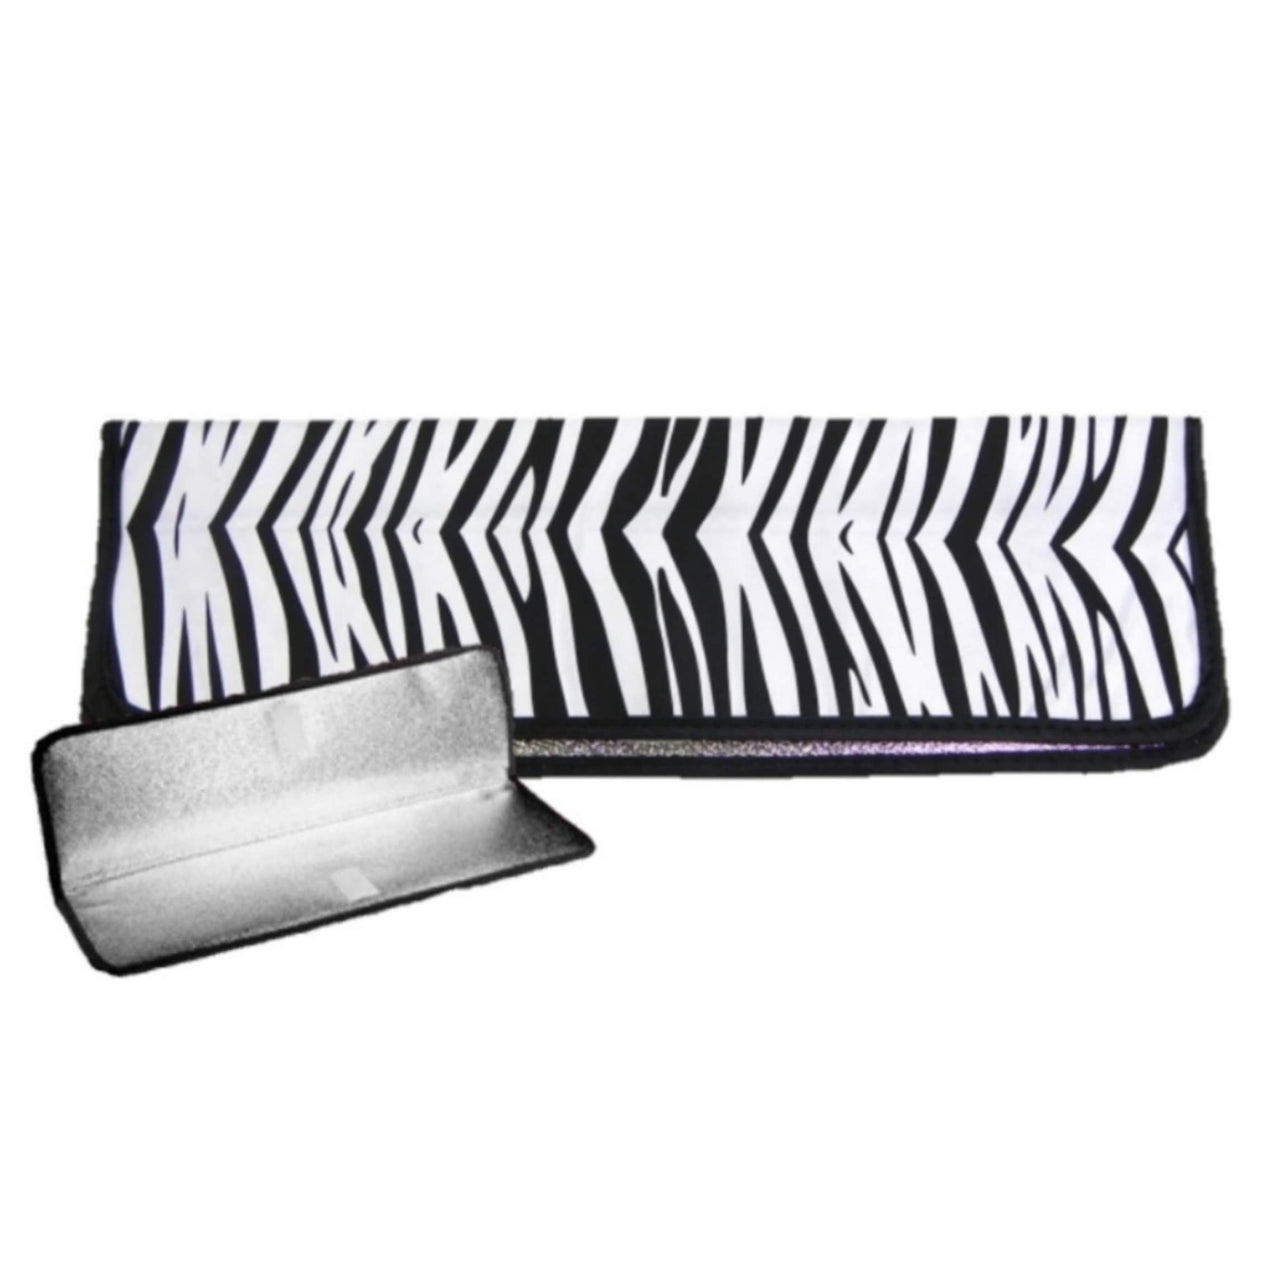 Heat Protective Mat Soft Touch Felt Exterior Velcro Closure for Easy Travel - White Zebra